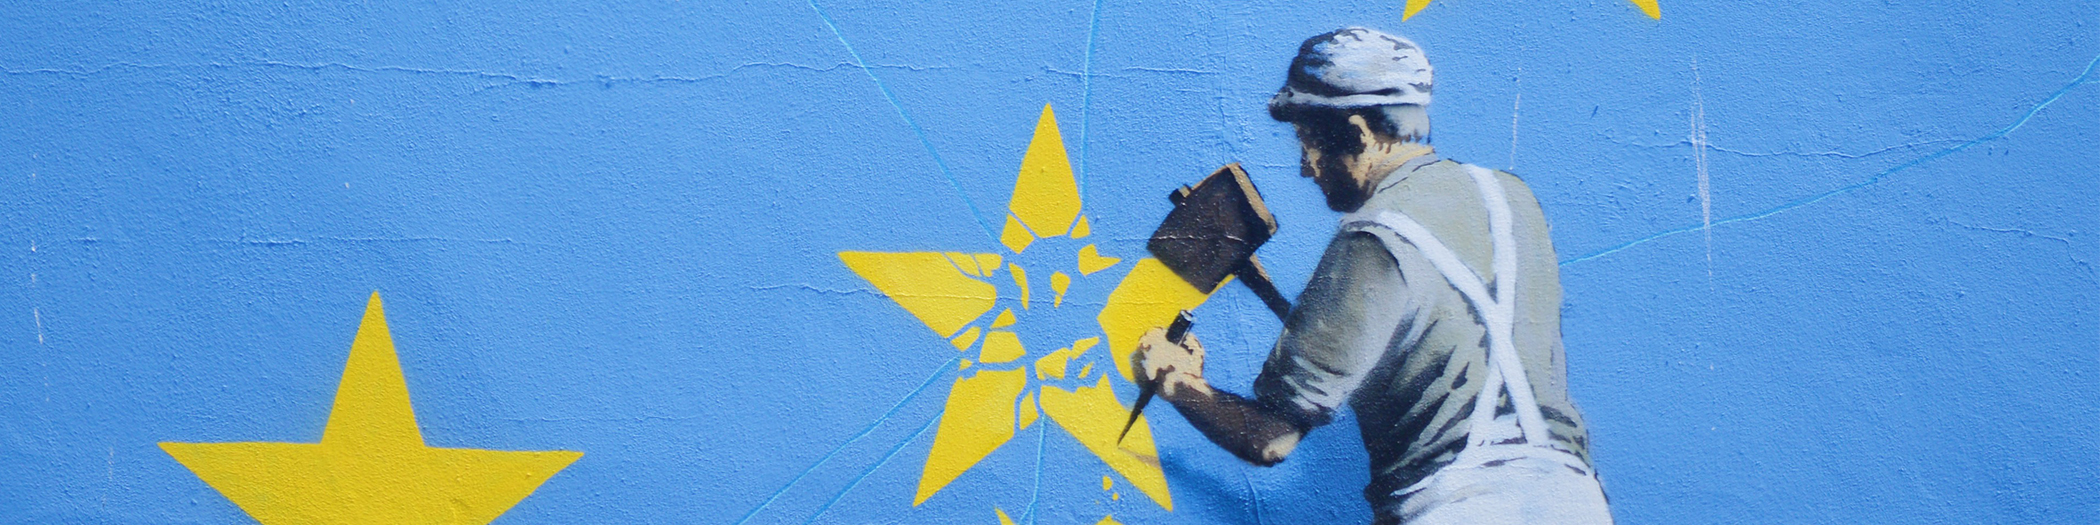 Banksy street art man removing EU star